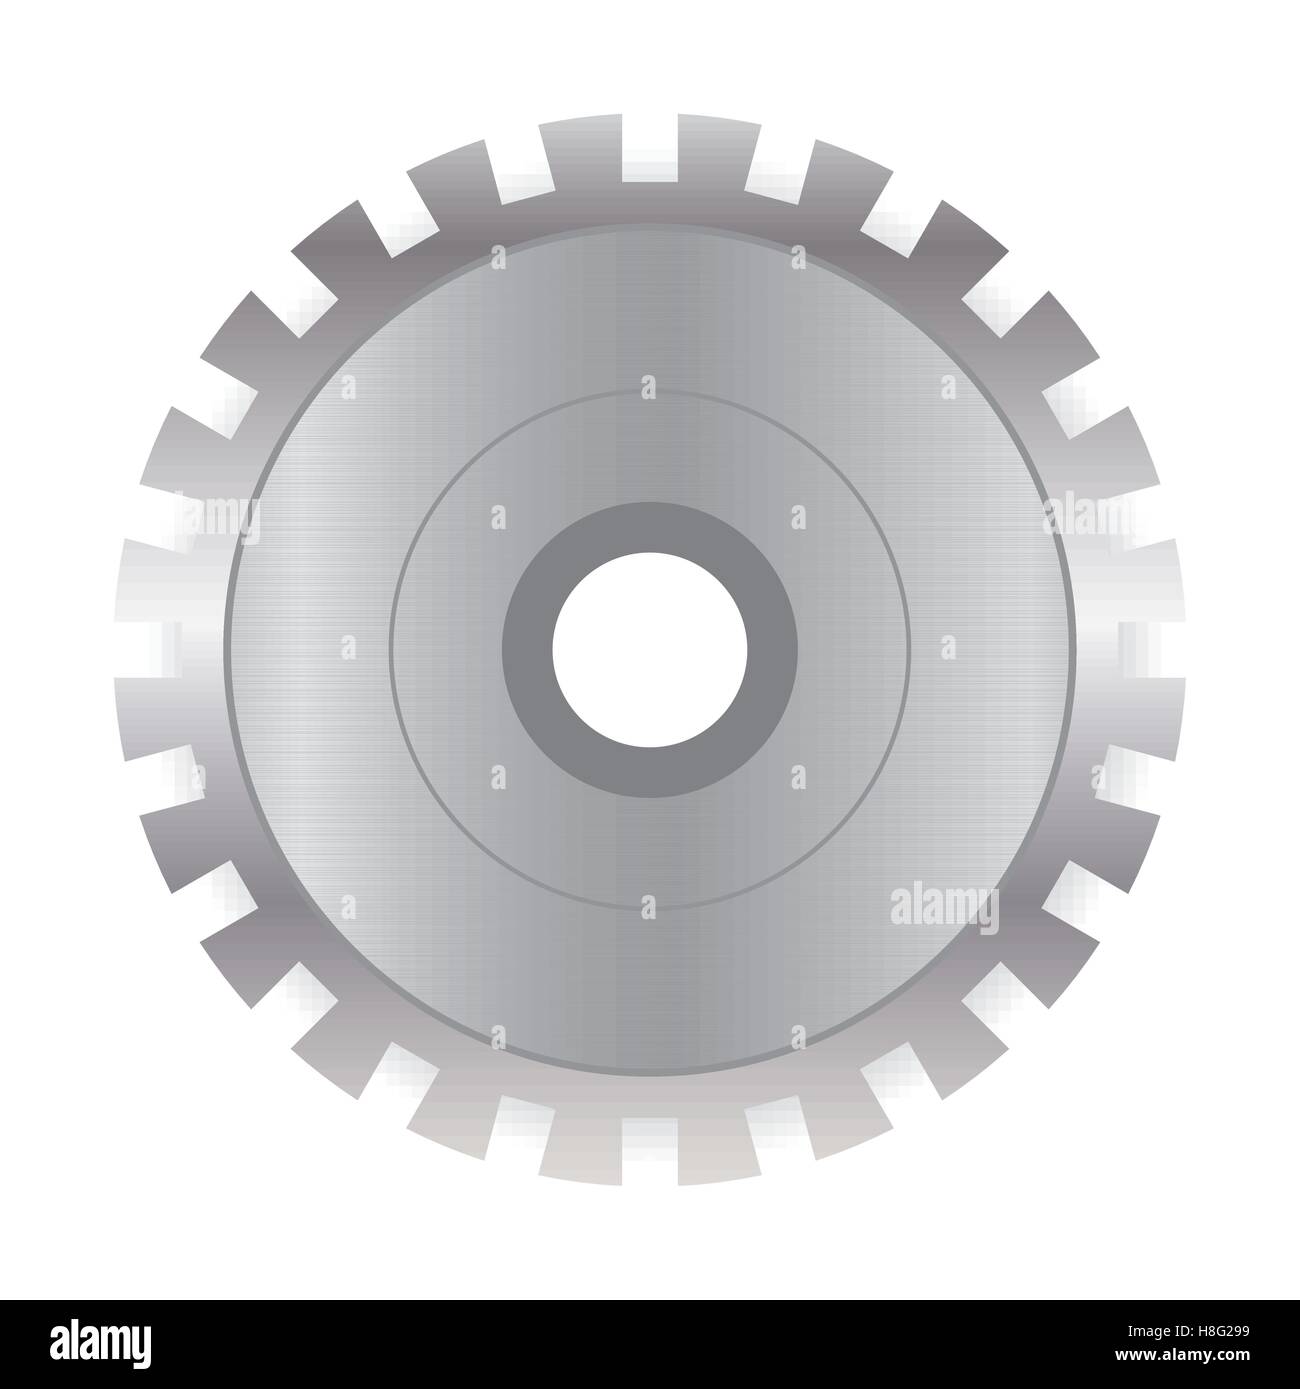 saw, blade, wheel, cutting, circular, vector, spark, steel, illustration, metal, tool, work, disc, circle, sharp, design, set Stock Vector